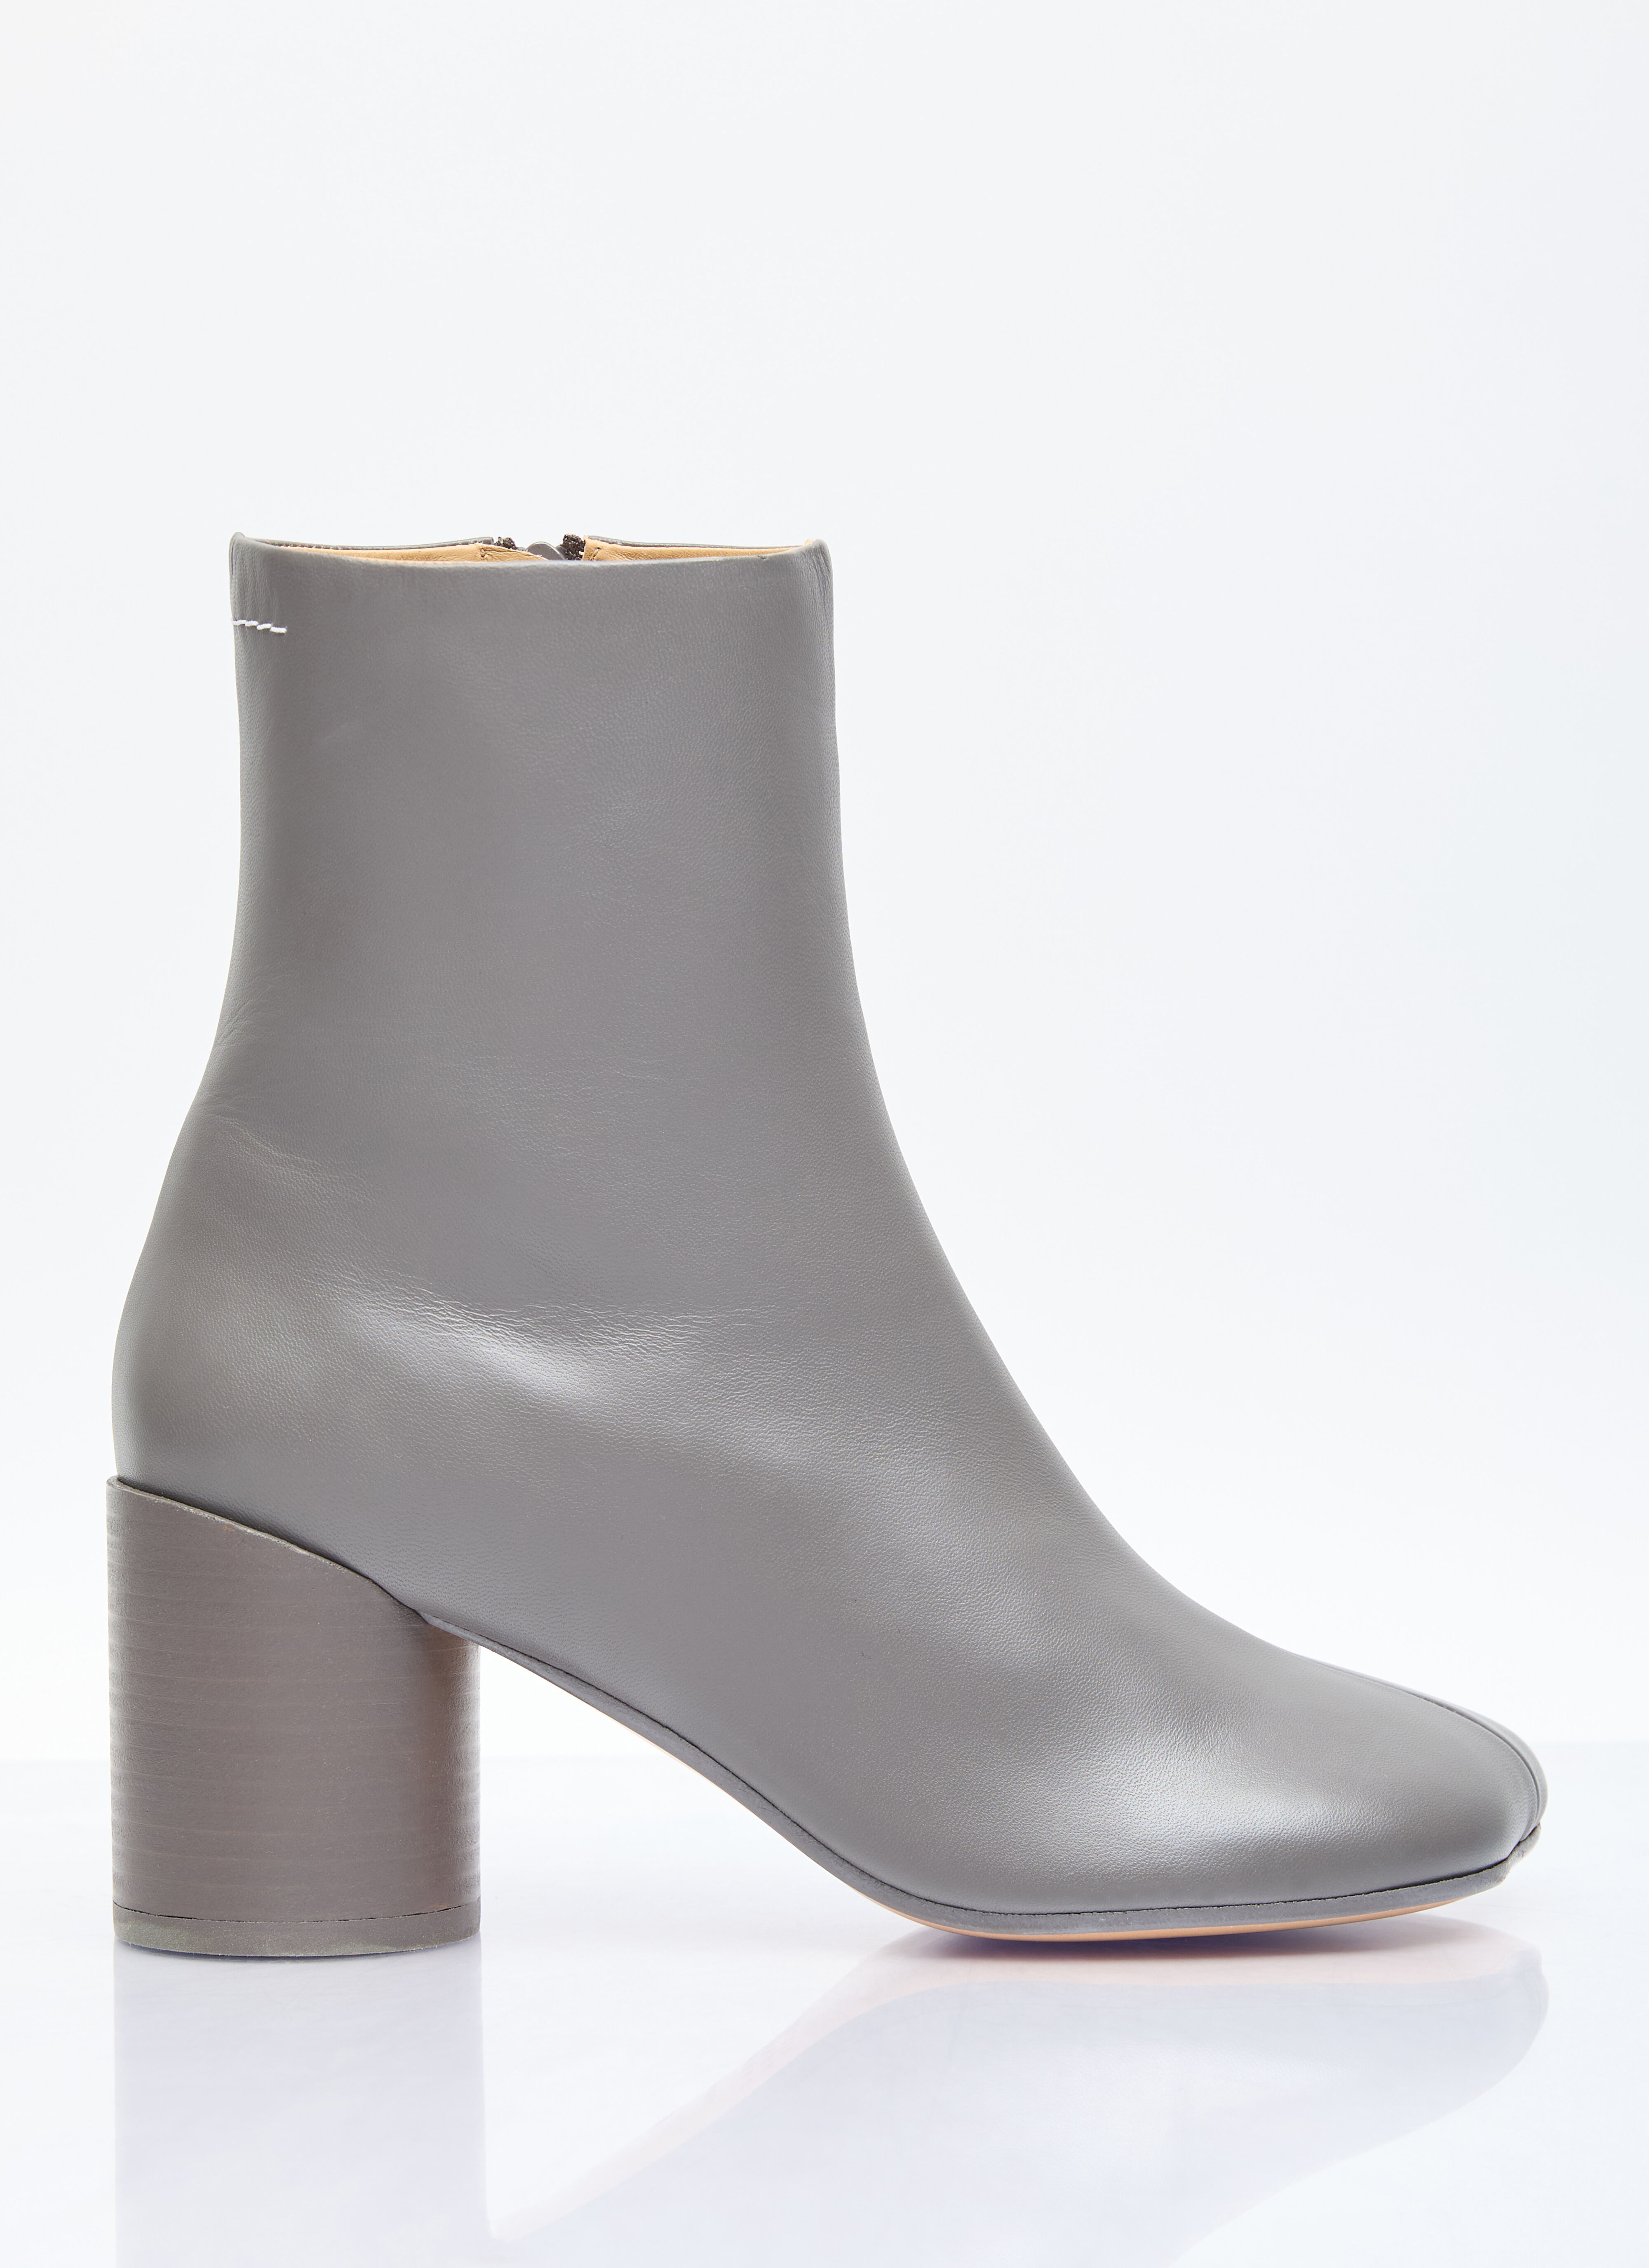 Vivienne Westwood Anatomic Ankle Boots 화이트 vvw0255056